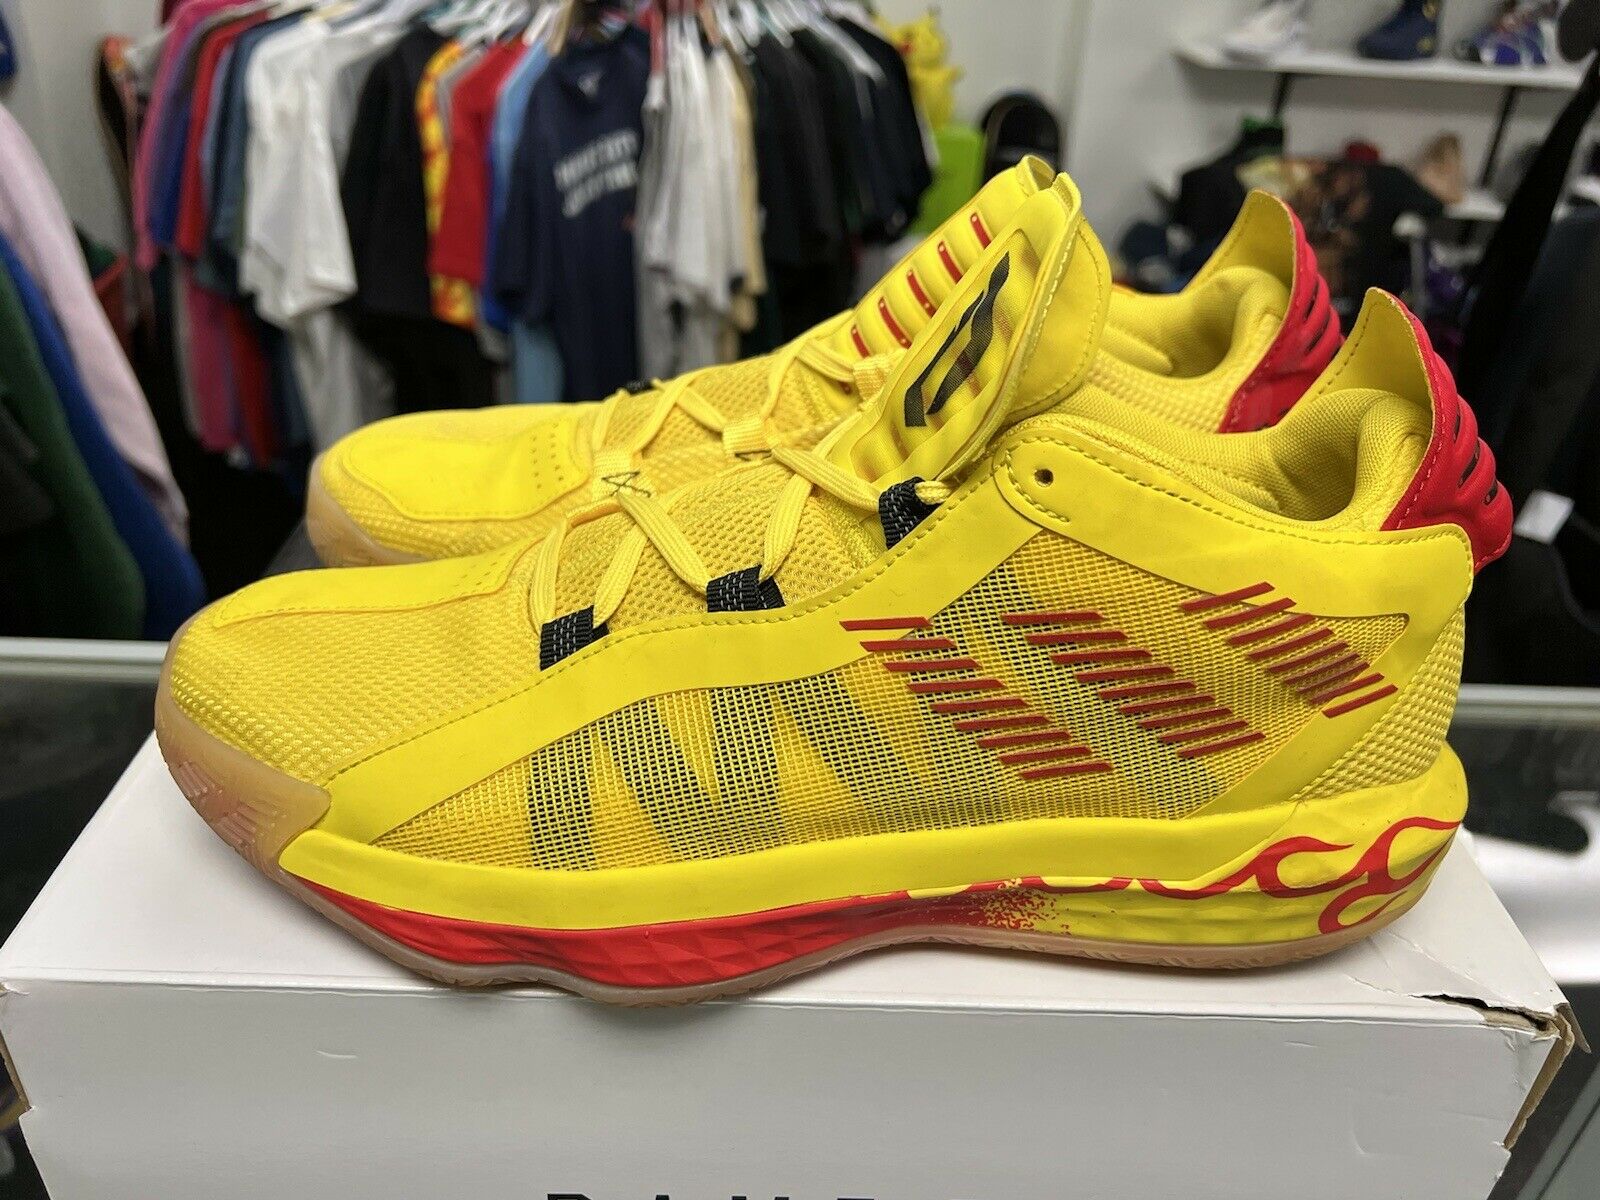 Adidas Dame Lillard 6 Yellow Red Shoes FW8498 Size 10.5